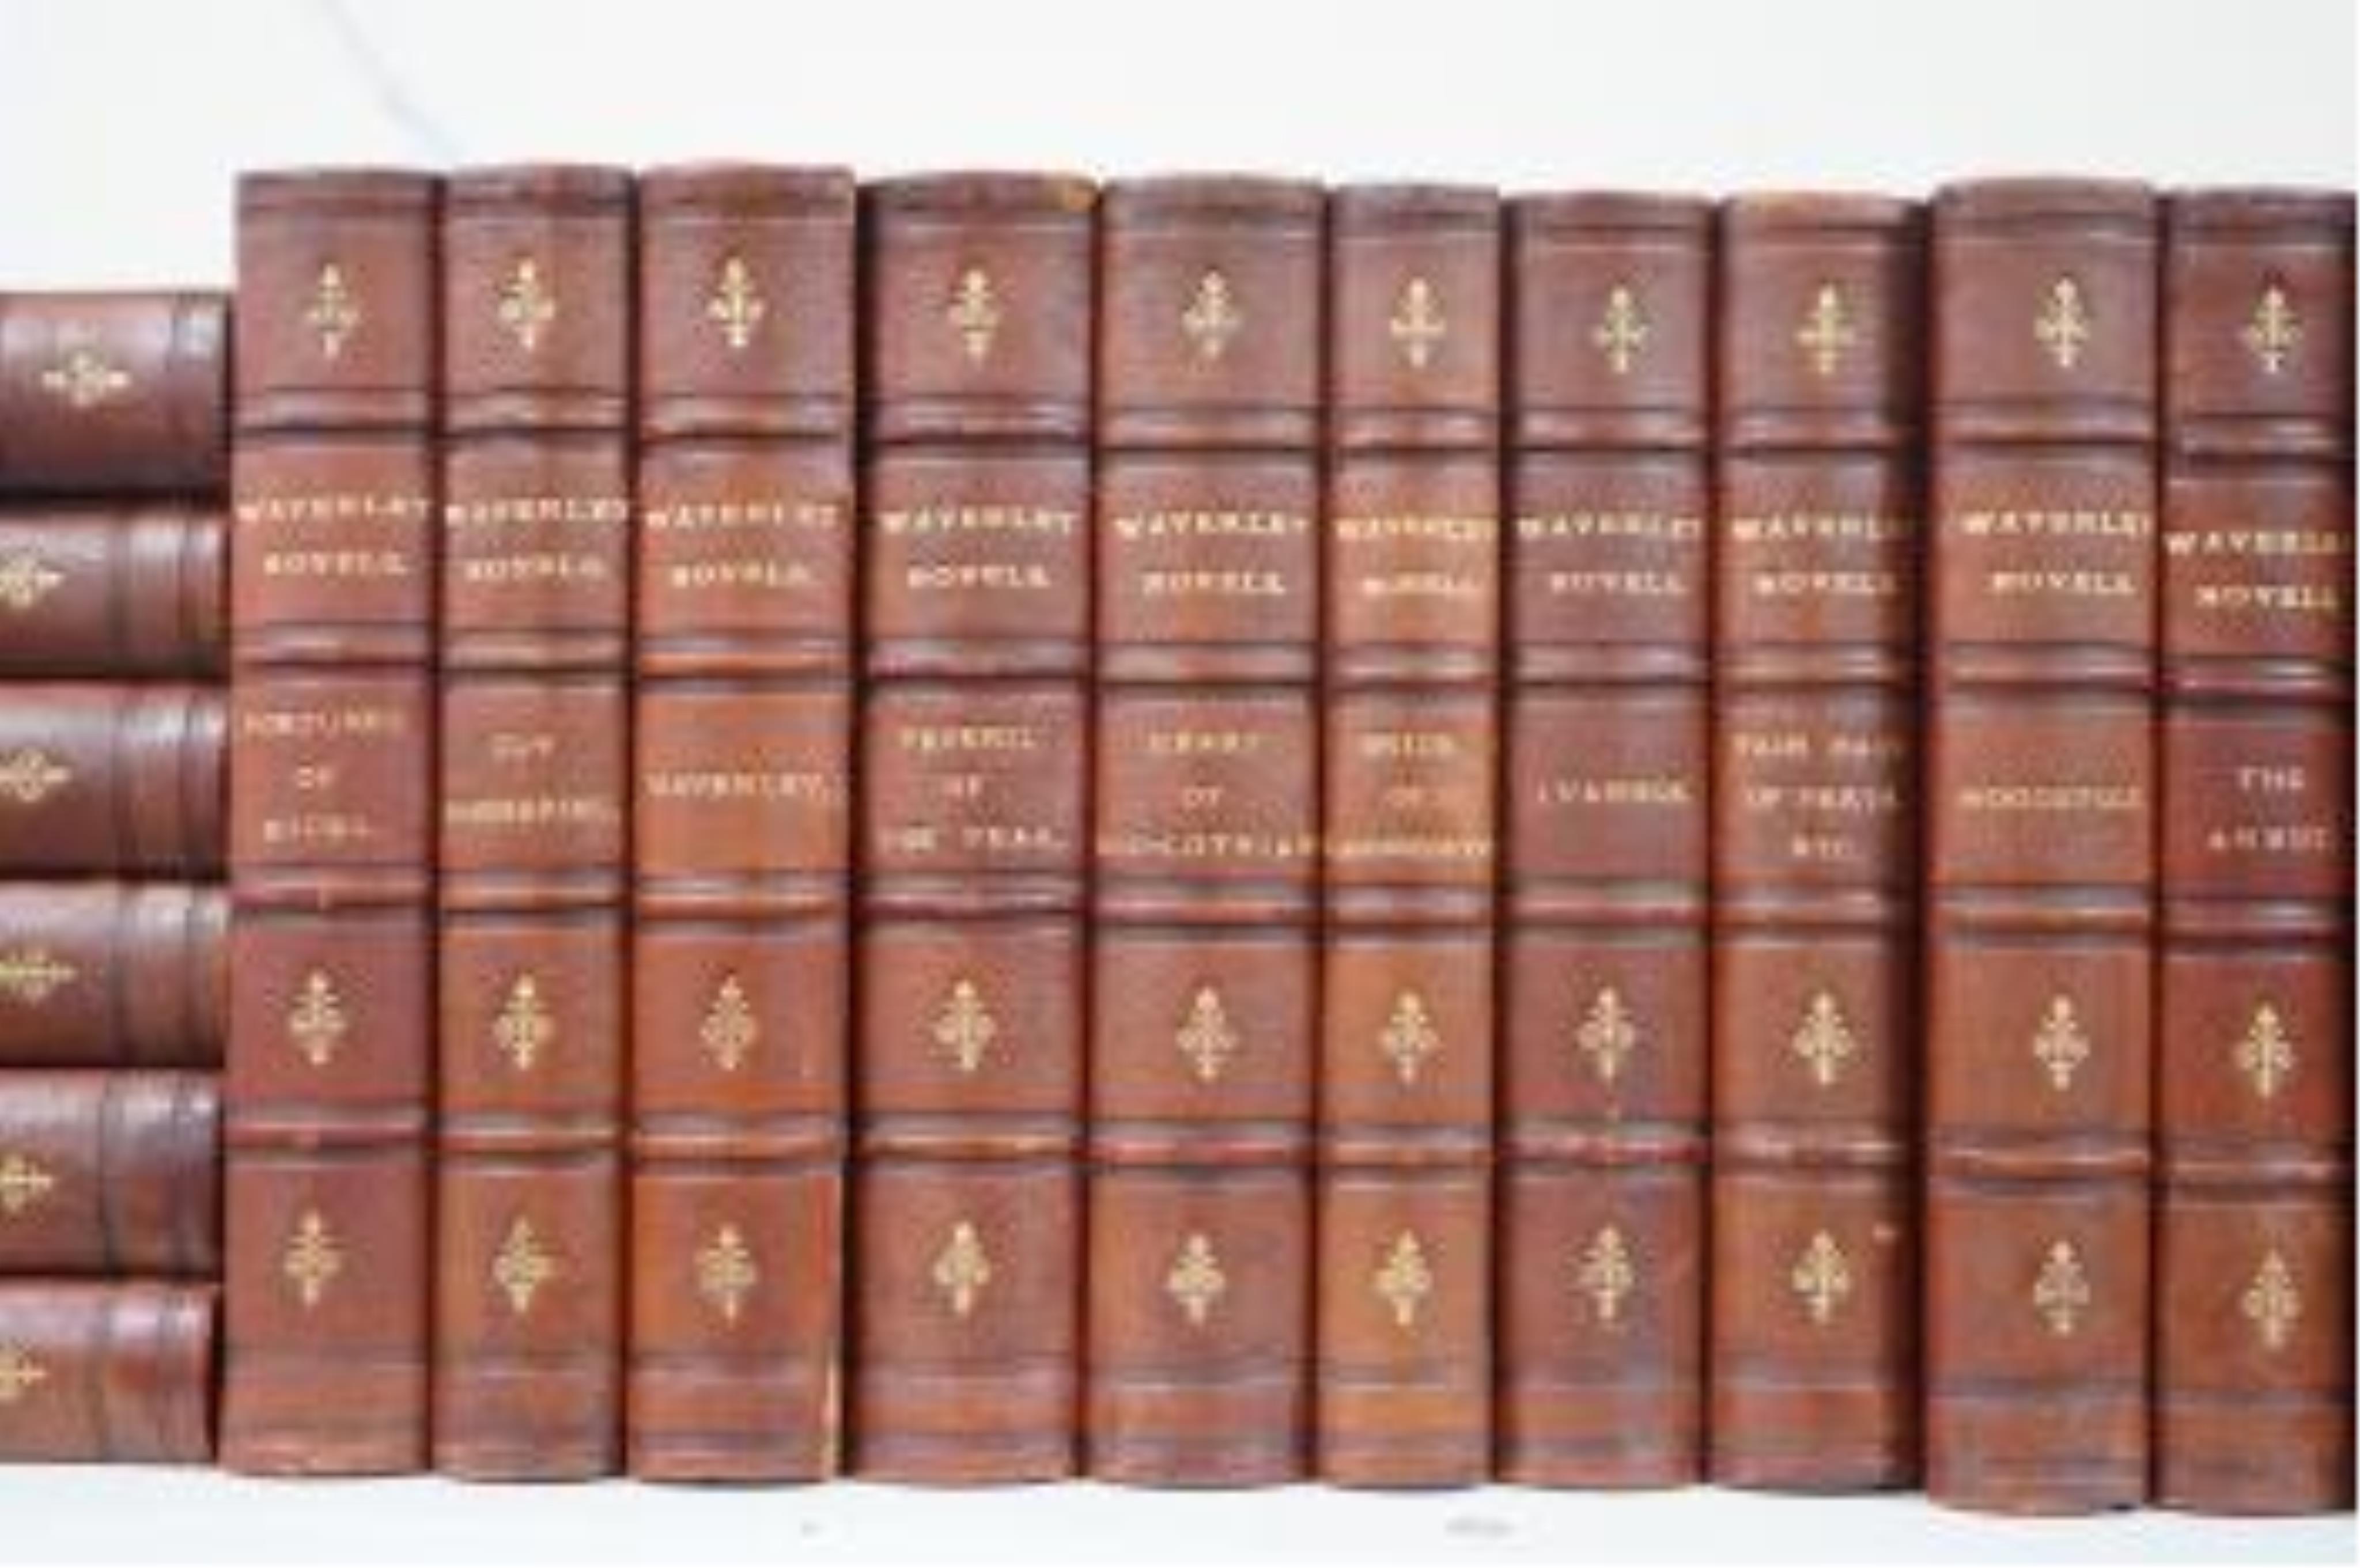 Johnson, Samuel - English Poets, Works, vols 5 - 21 only, half morocco, London 1810